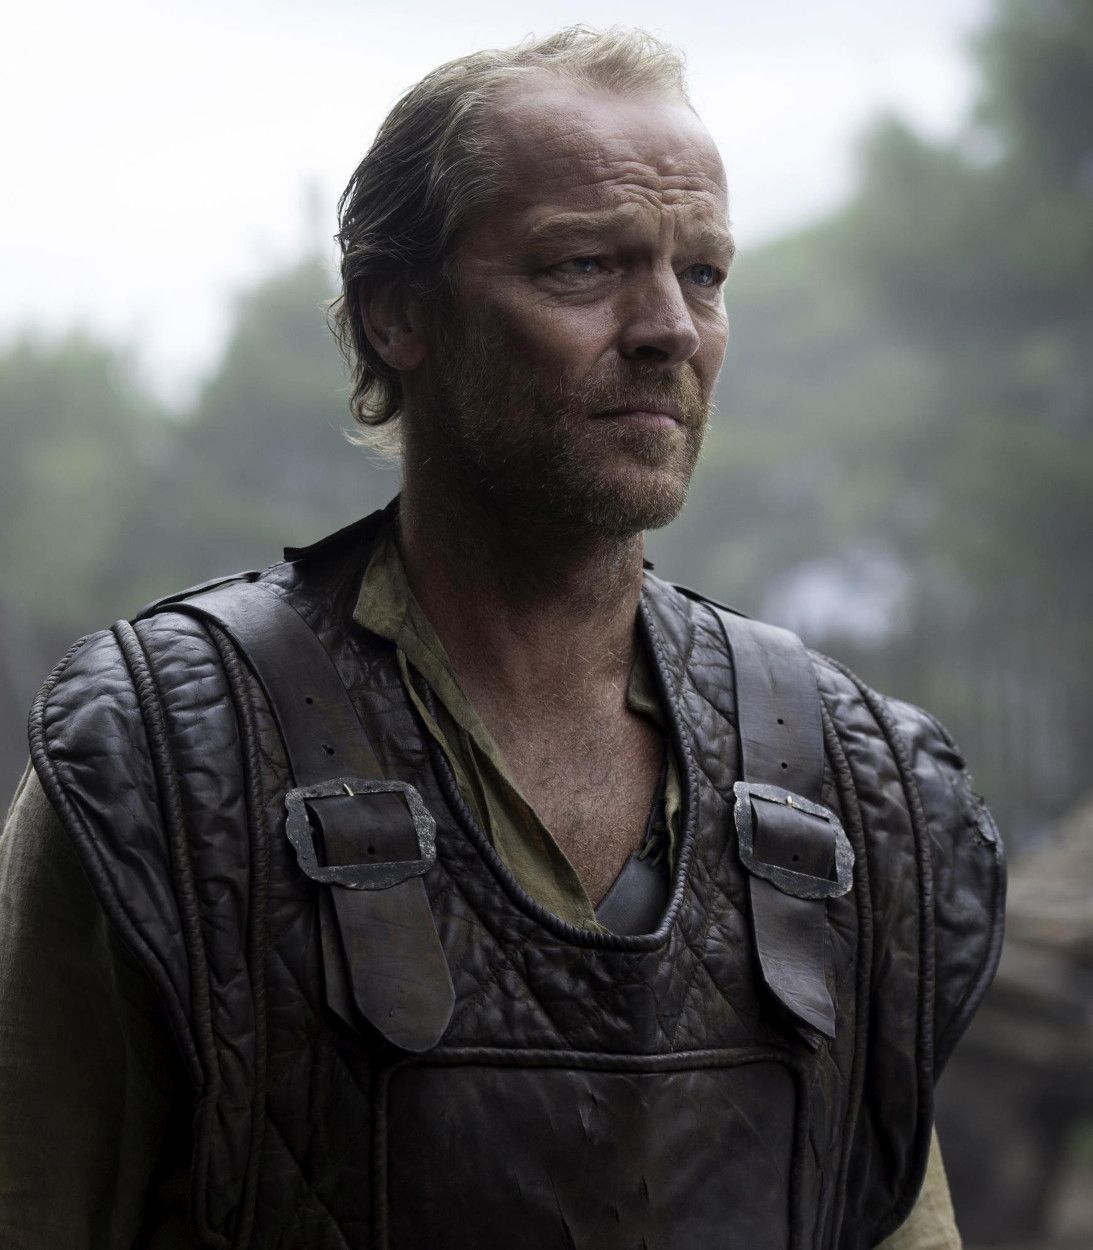 Iain Glen As Jorah Mormont In Game Of Thrones